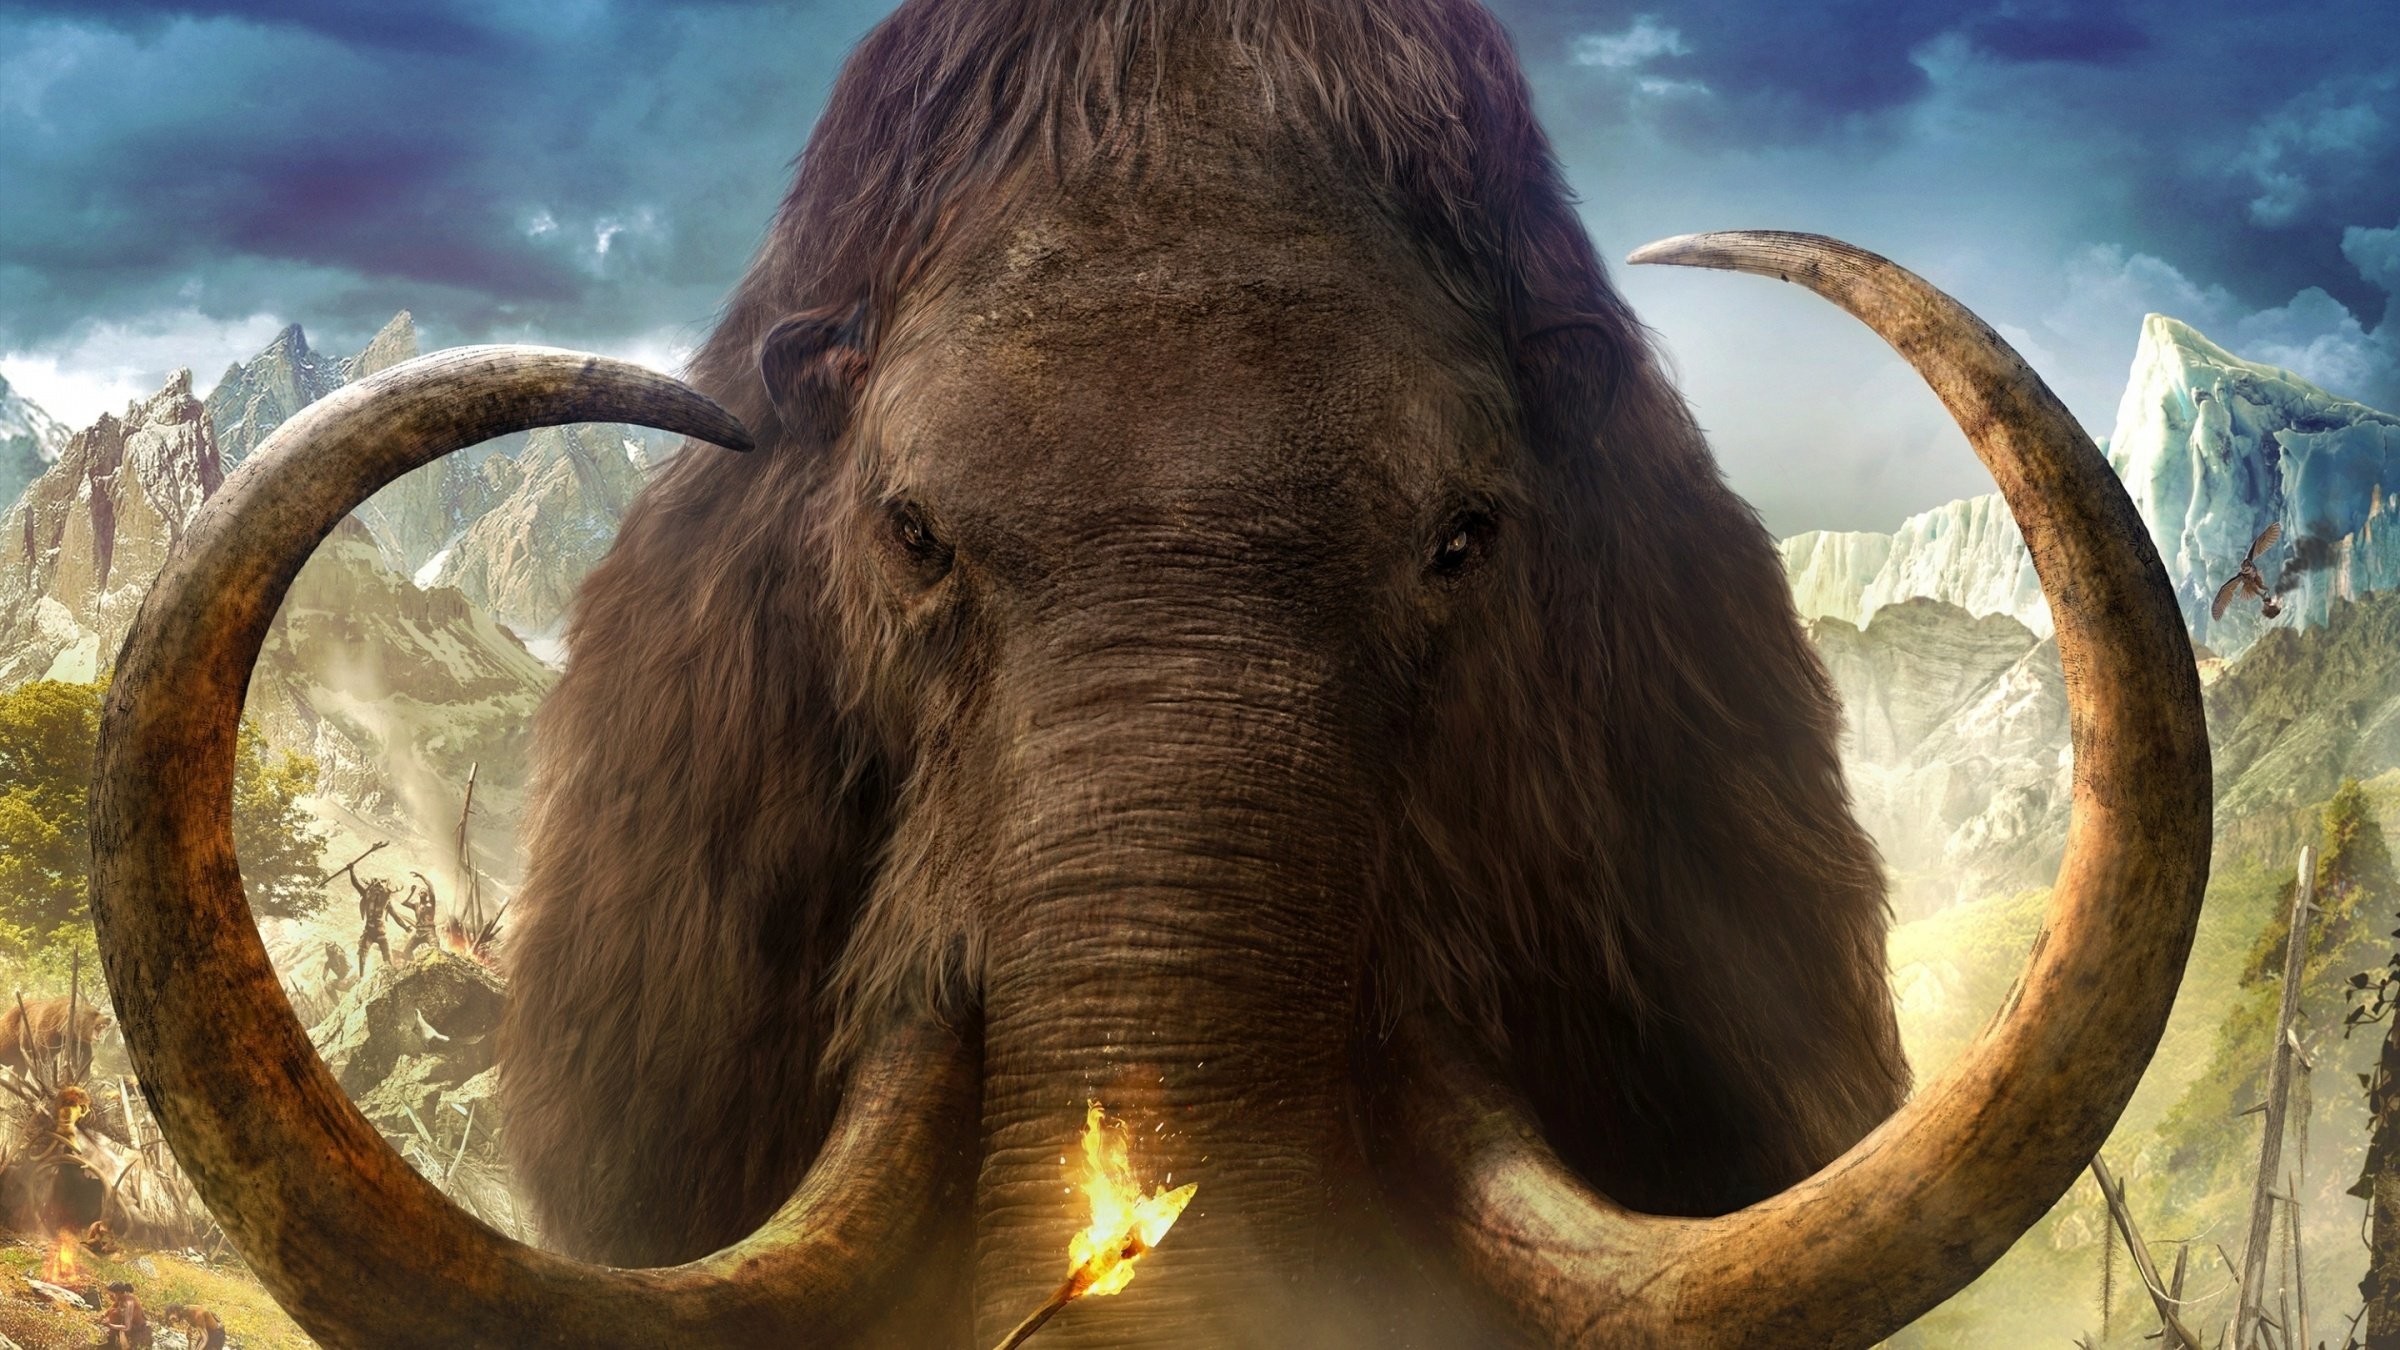 mammoth wallpaper,mammoth,elephants and mammoths,elephant,terrestrial animal,indian elephant